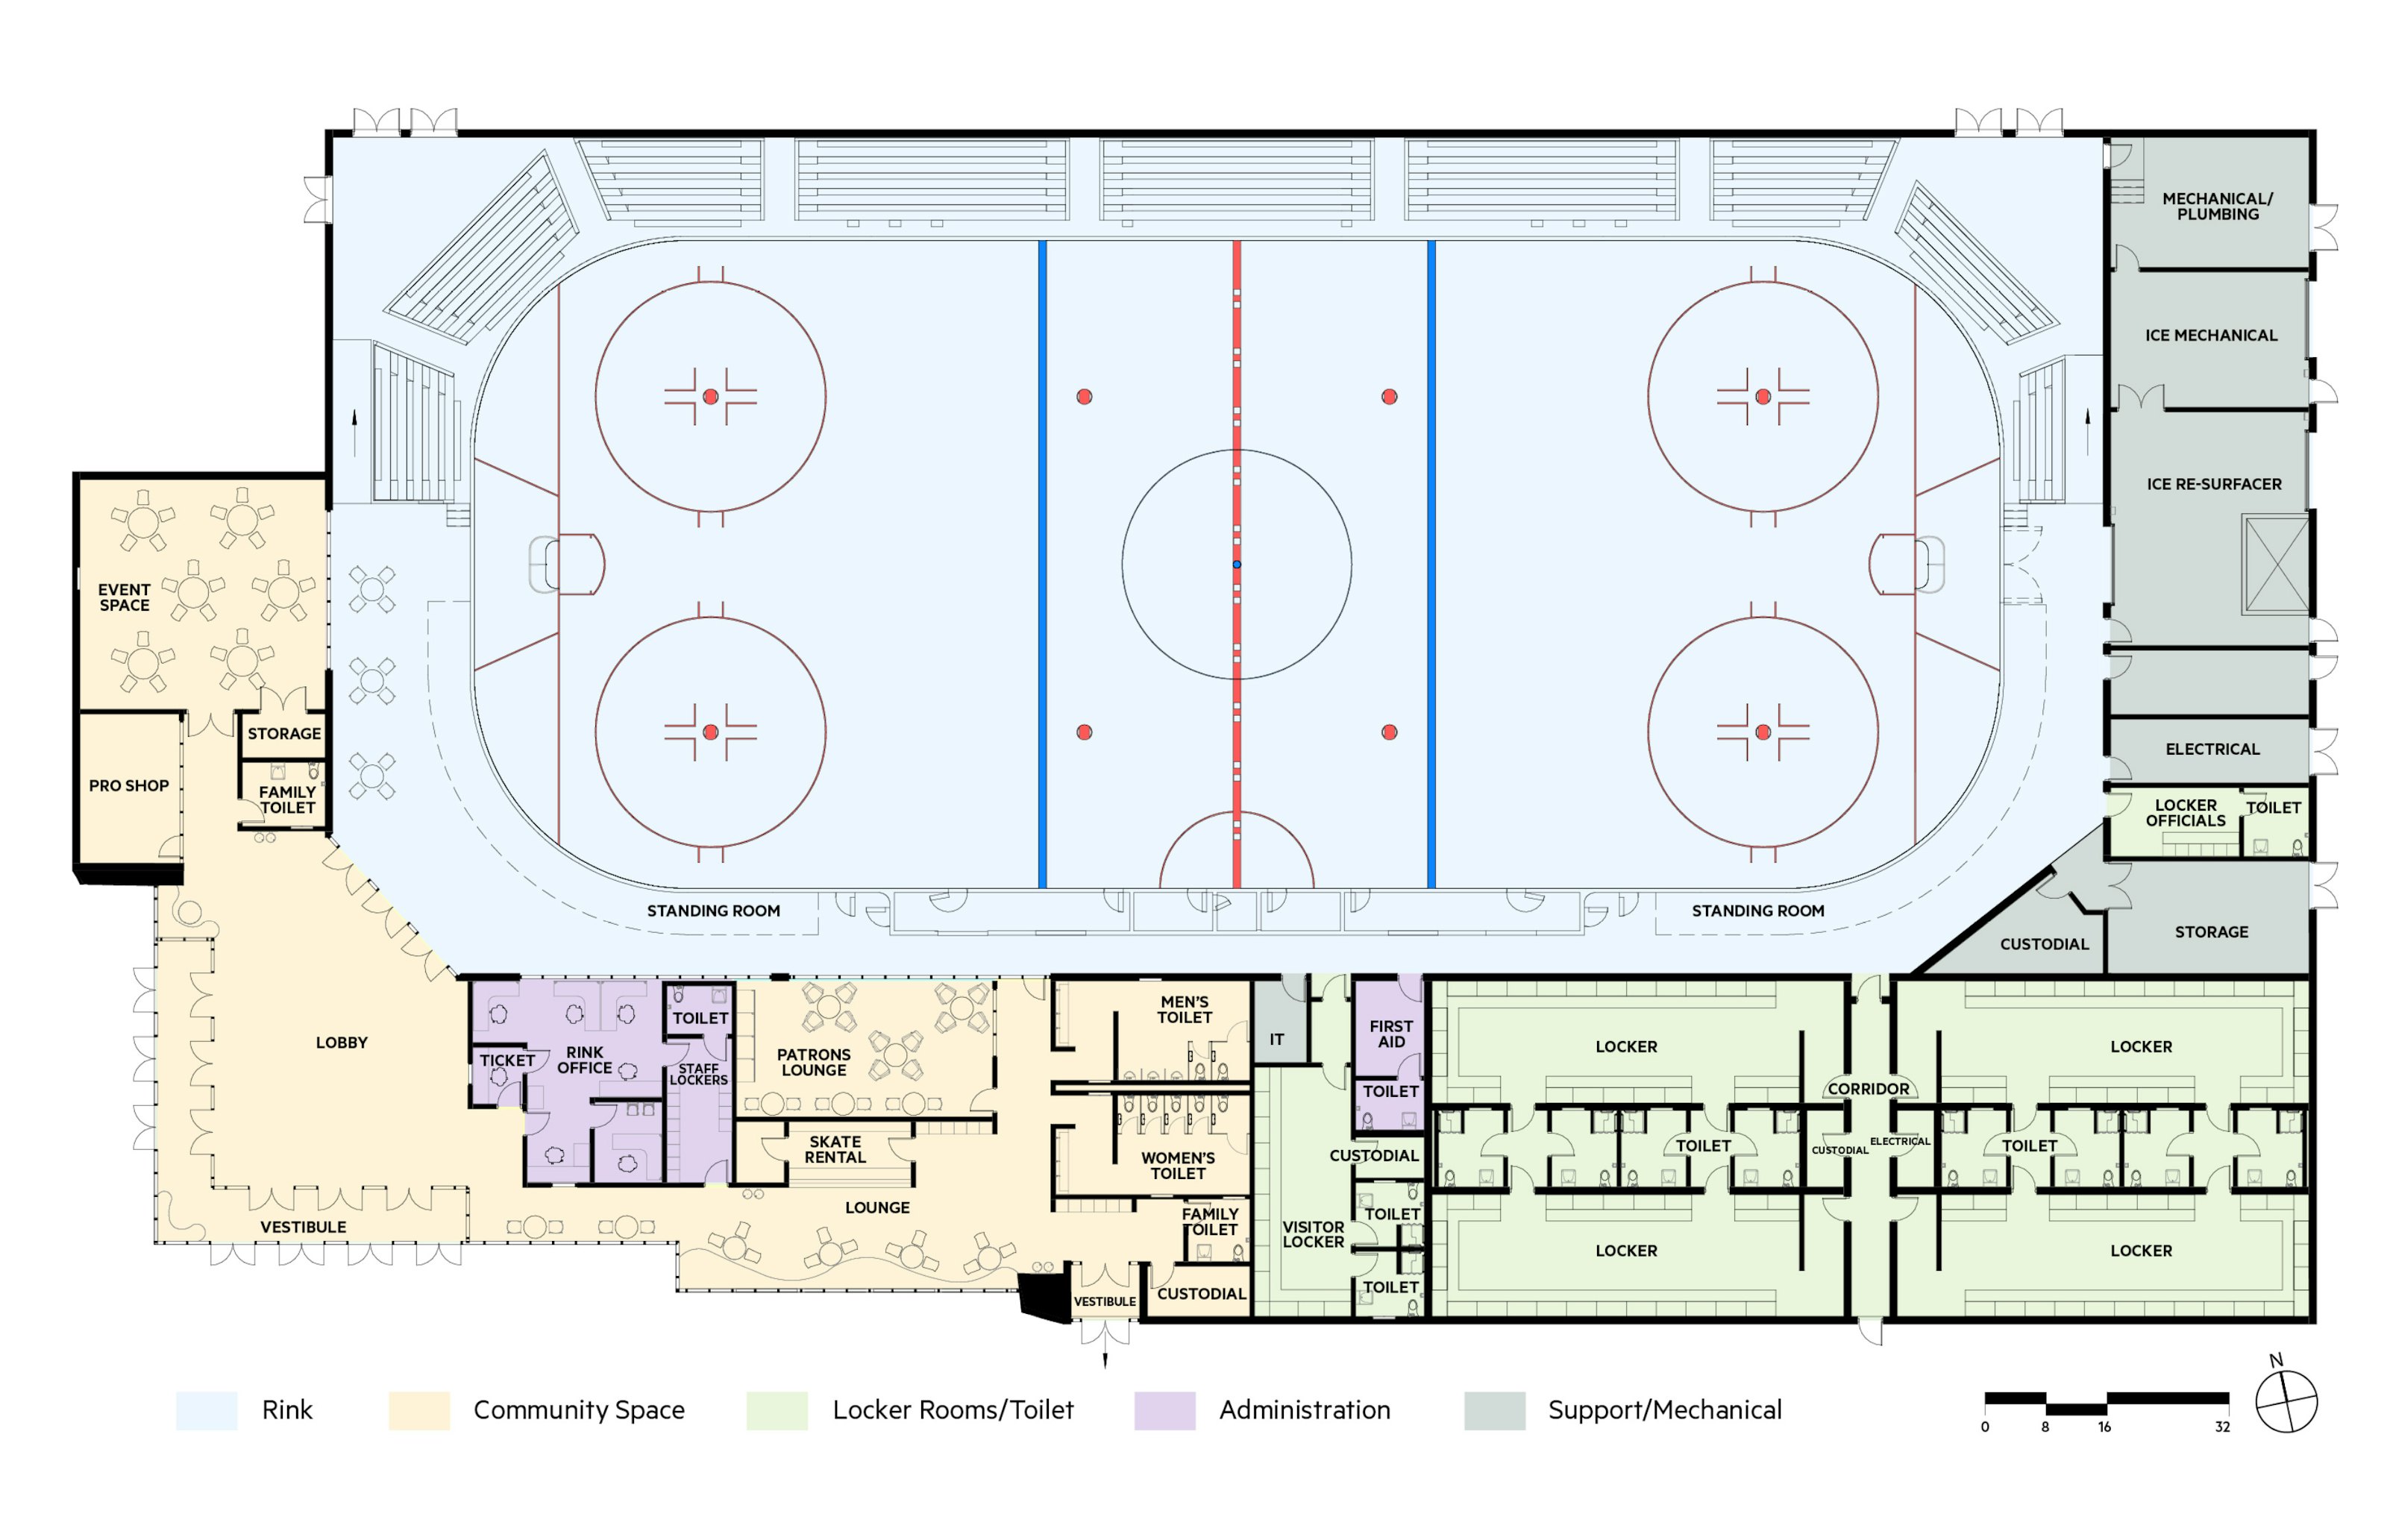 figure skating rink dimensions